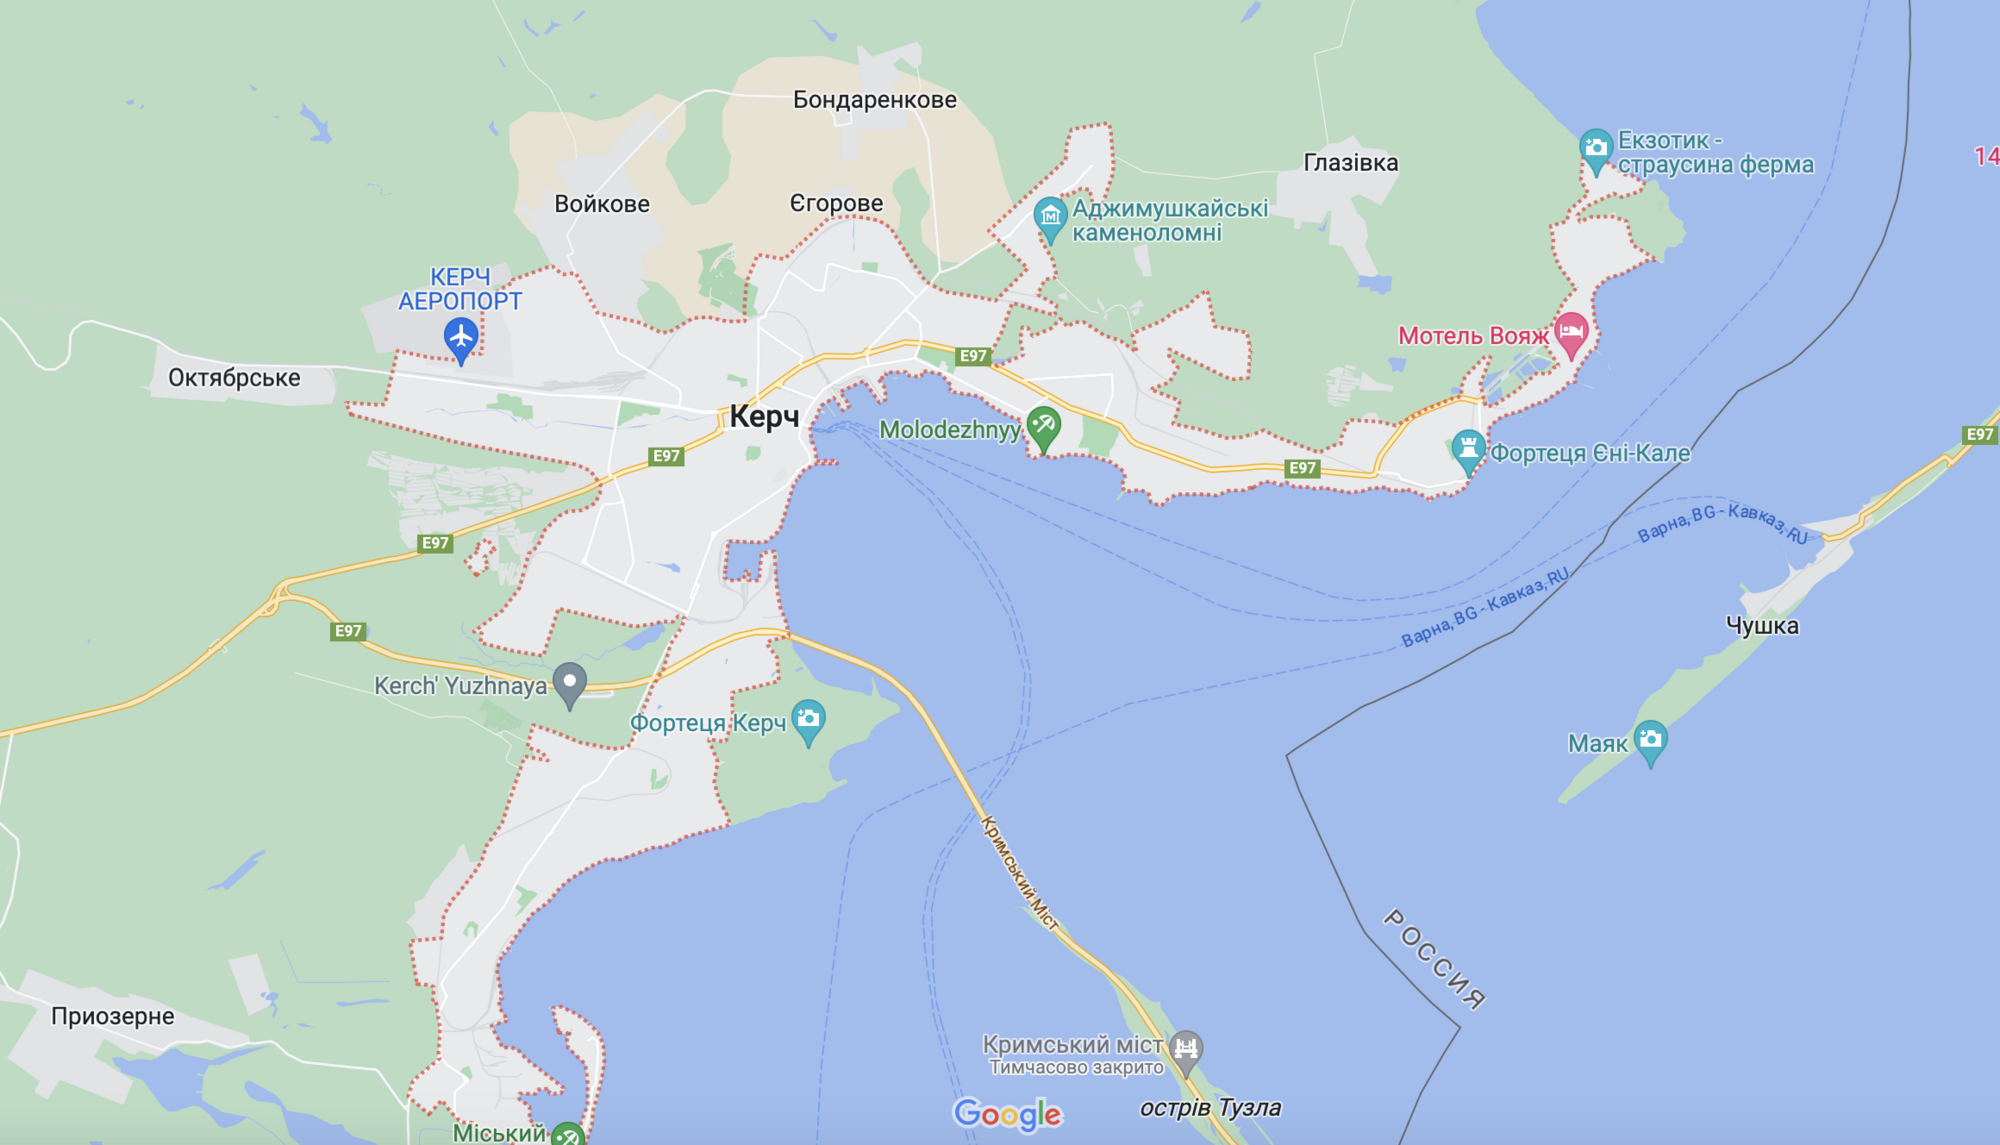 Explosions were heard near the Crimean Bridge: drones attacked a Russian tanker. Photo